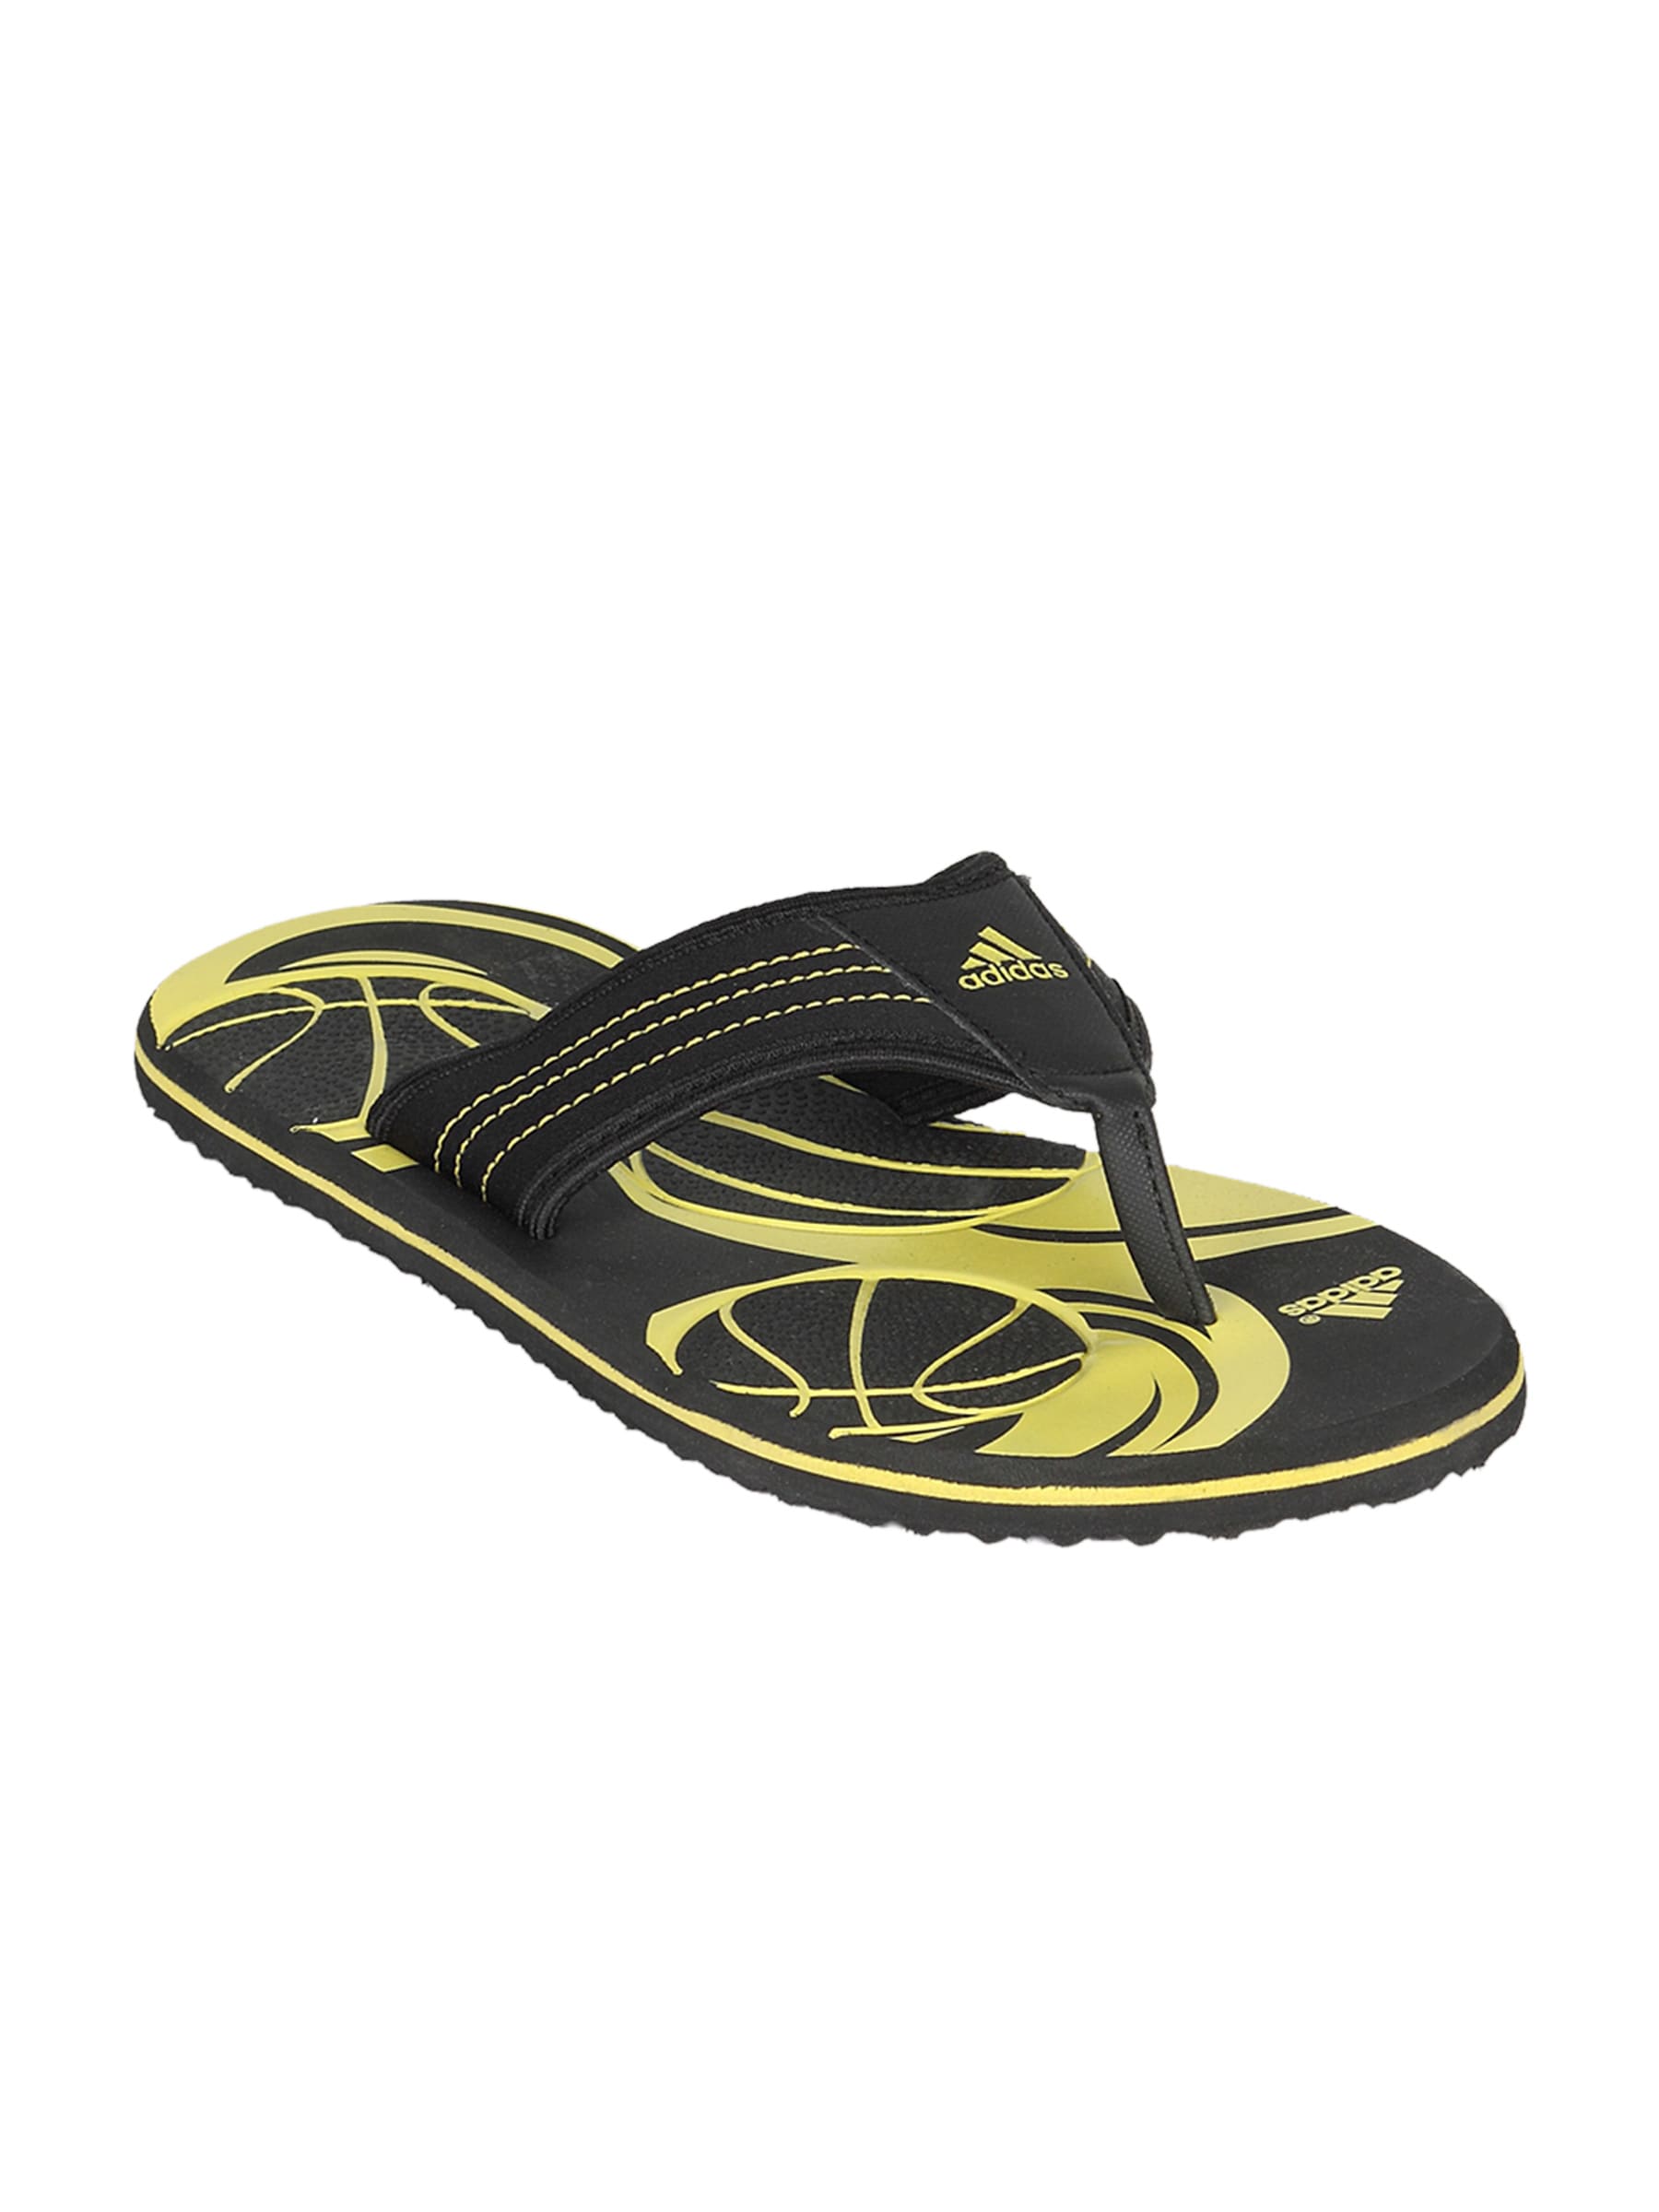 ADIDAS Men's Adi Slide Black Yellow Flip Flop